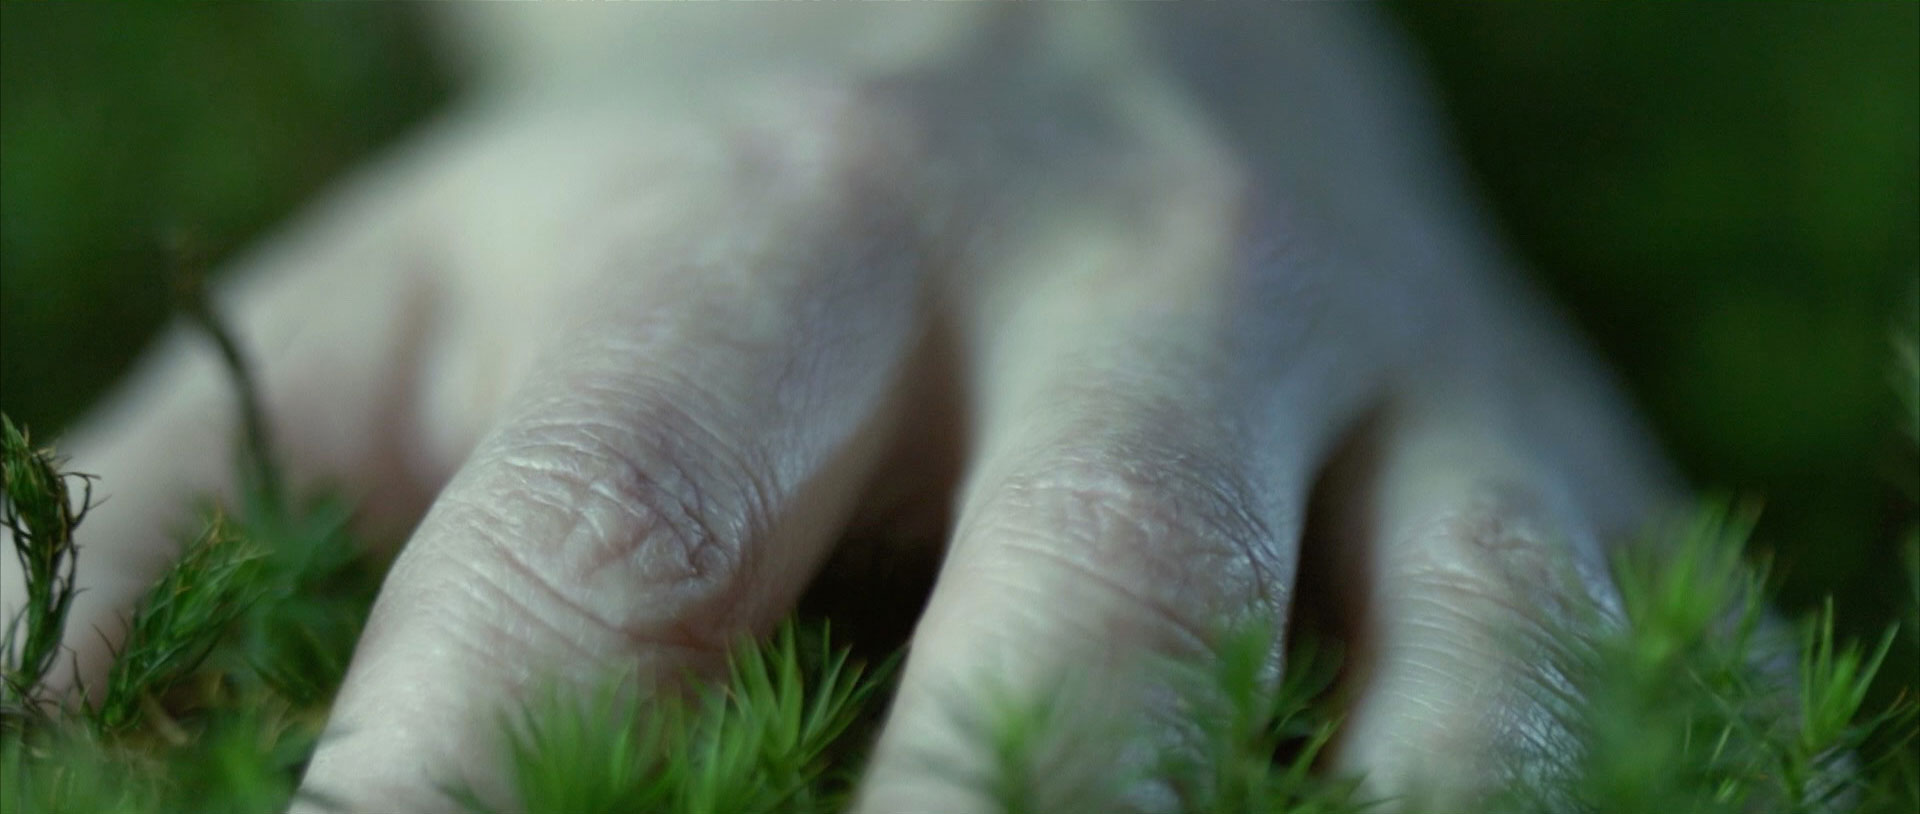 hand touching grass